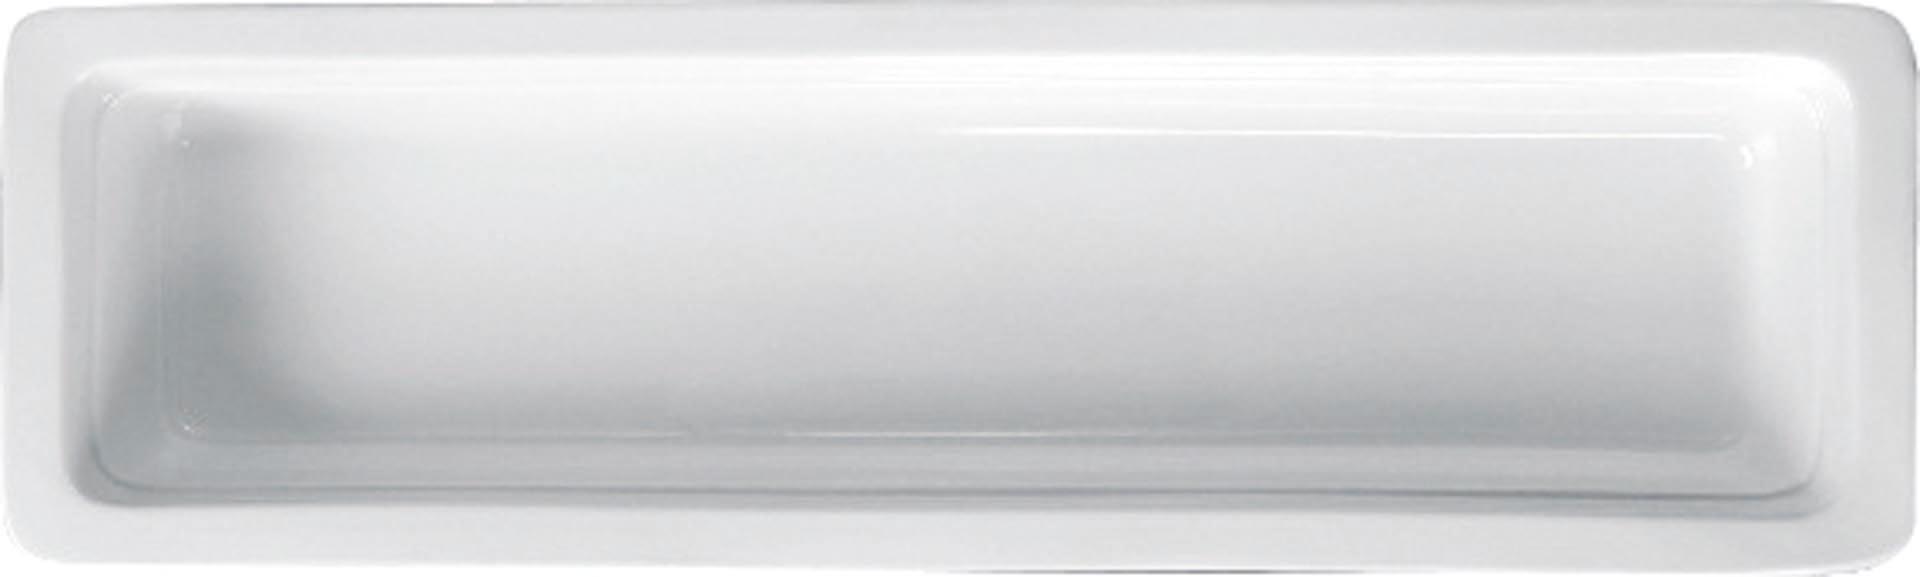 GN-Behälter Porzellan 1/2 65mm tief